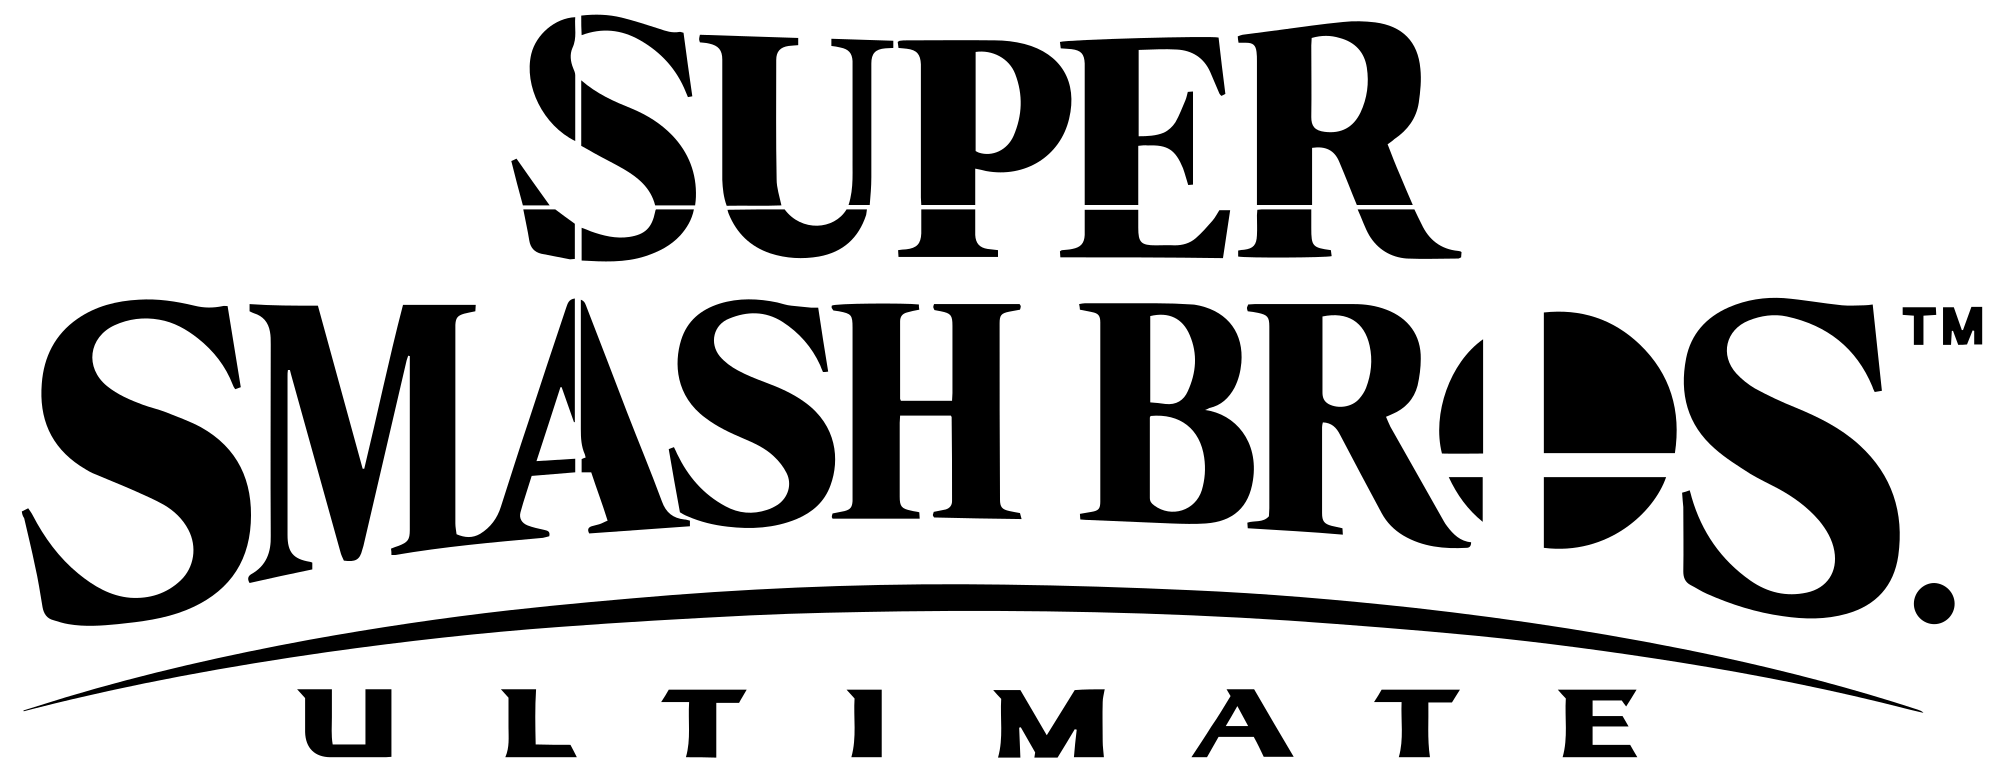 Smash Logo - Super Smash Bros. Ultimate logo.svg